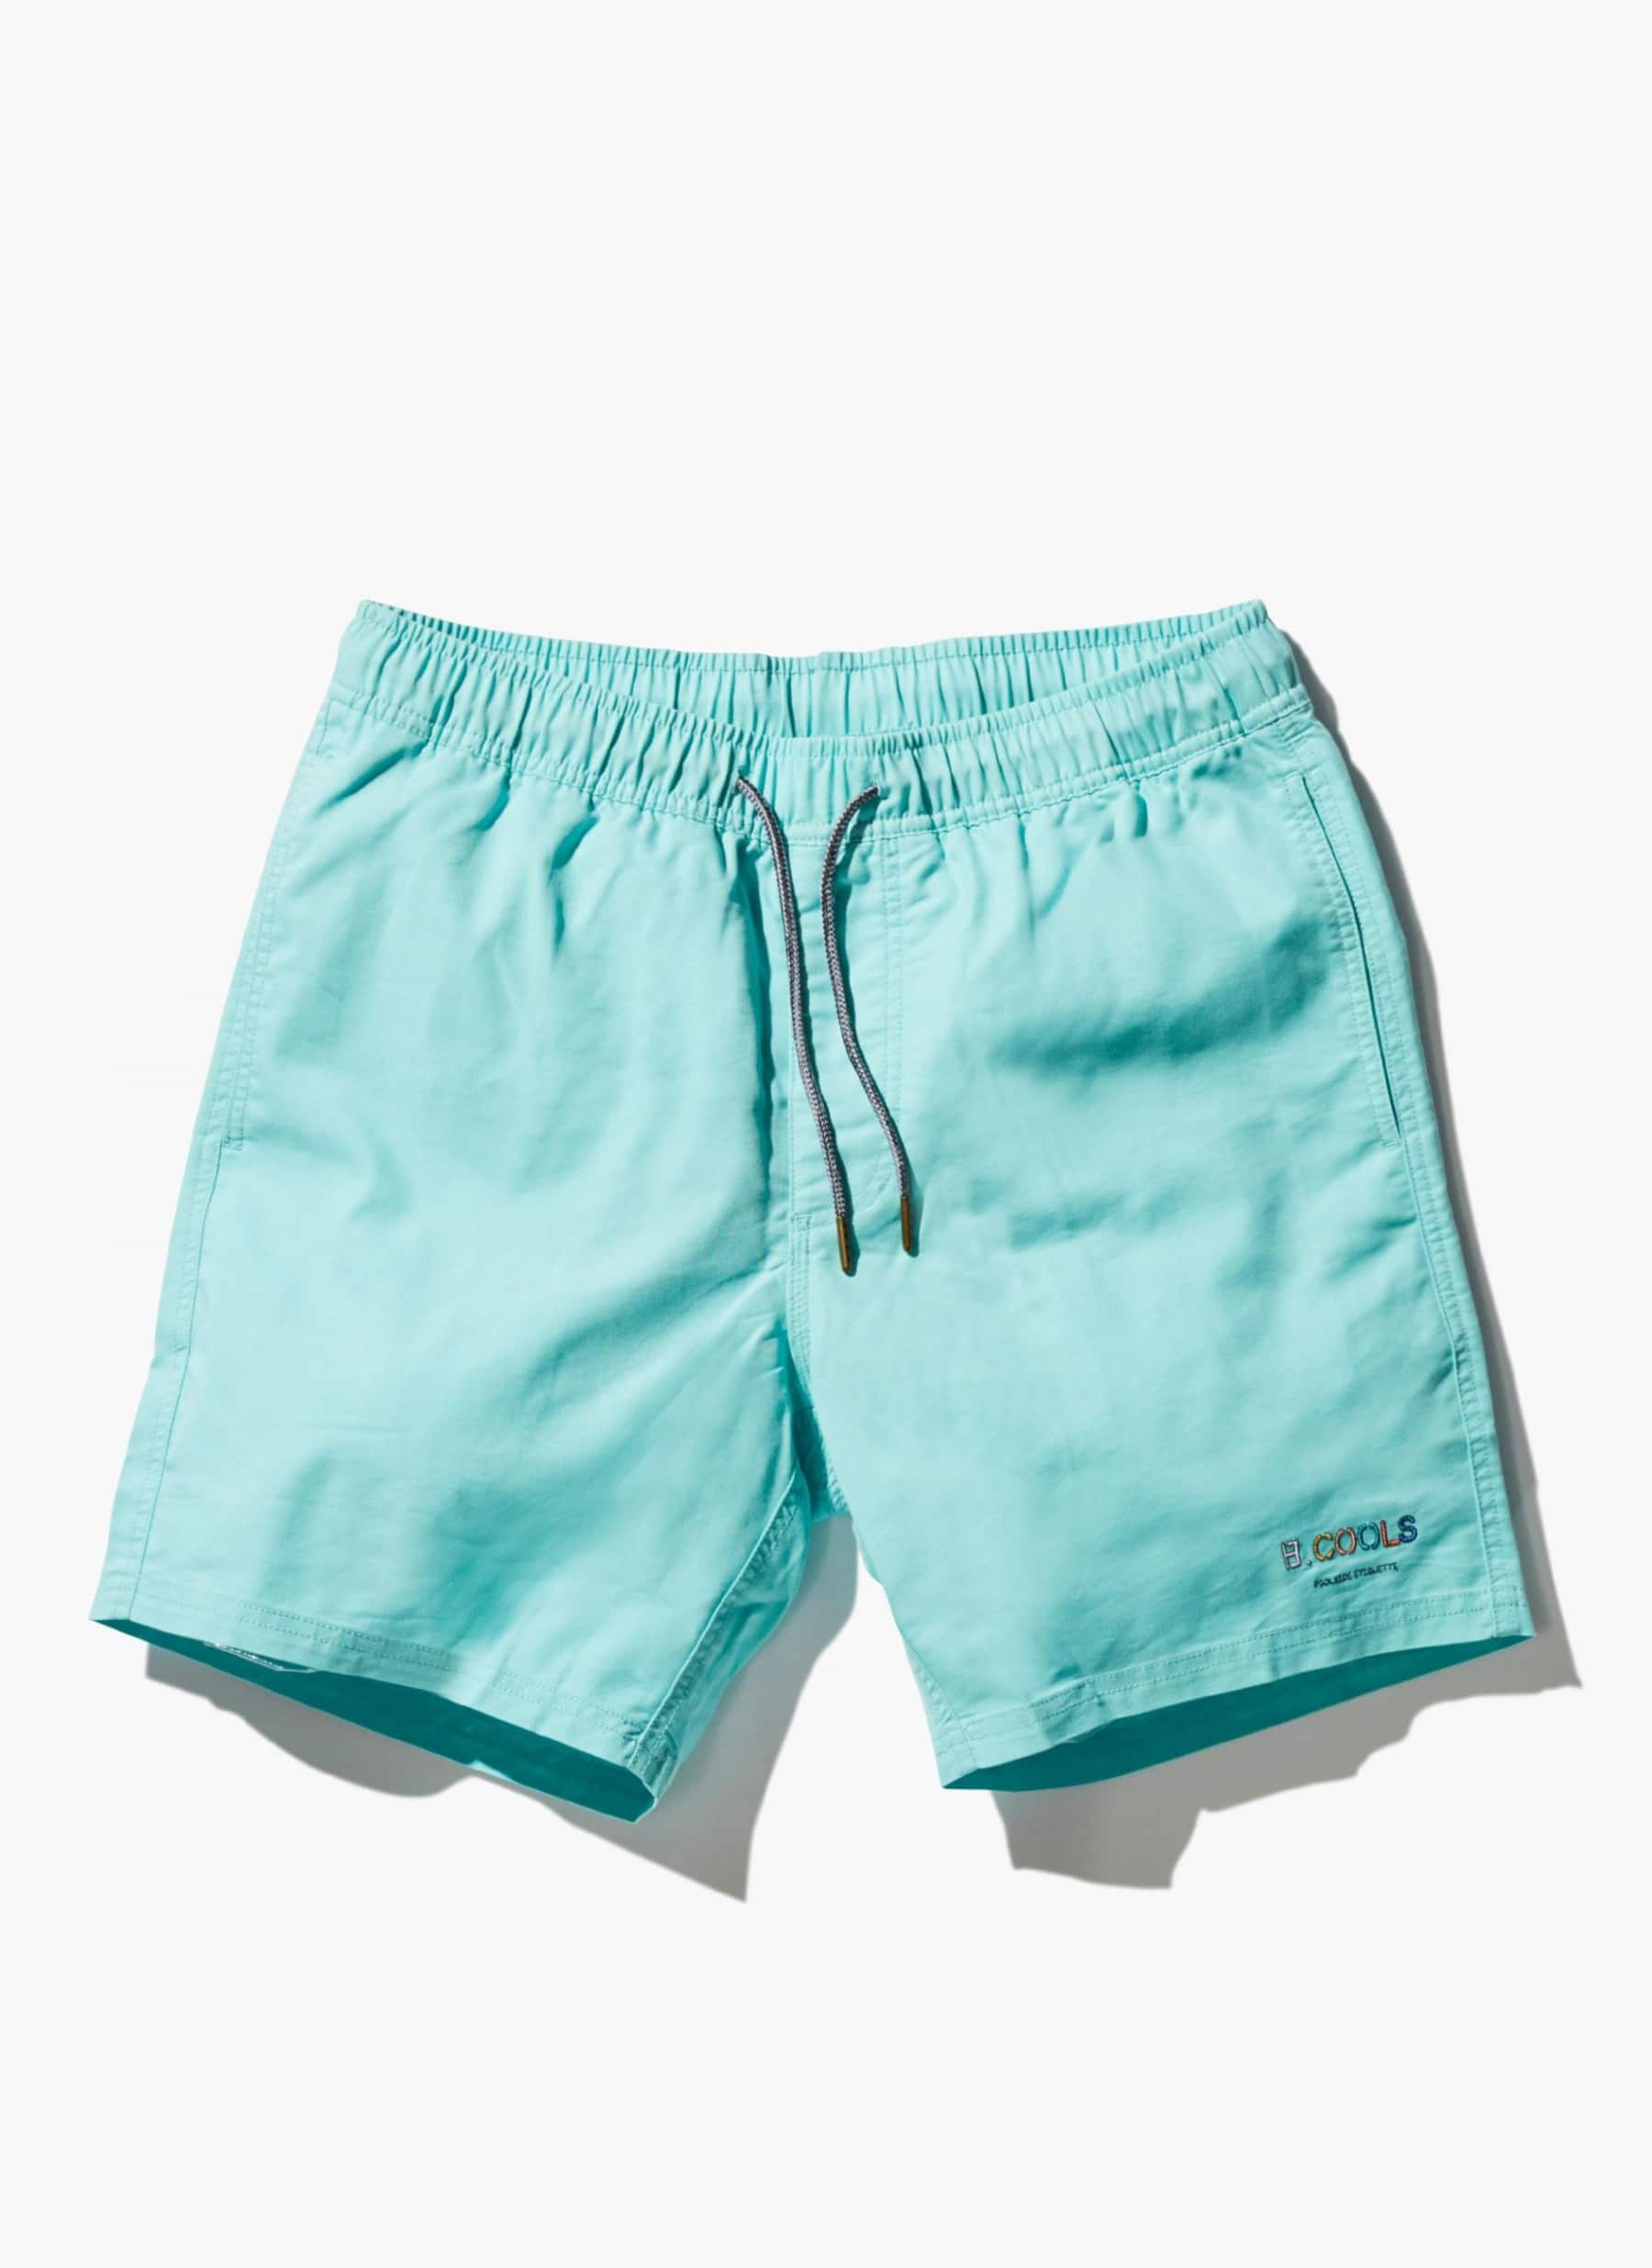 barney cools cyan color shorts